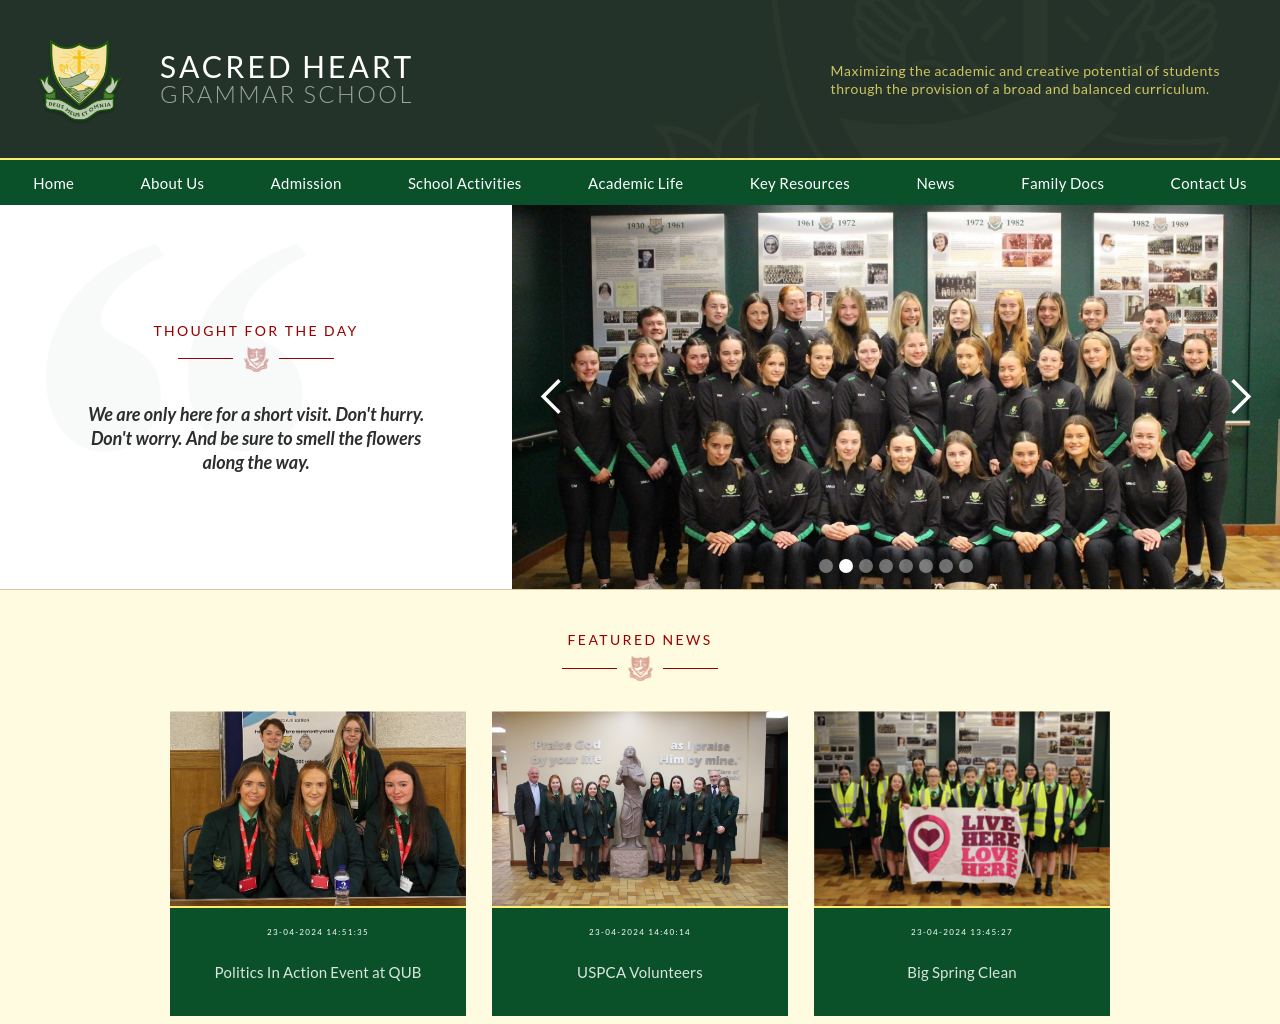 The Sacred Heart Grammar School